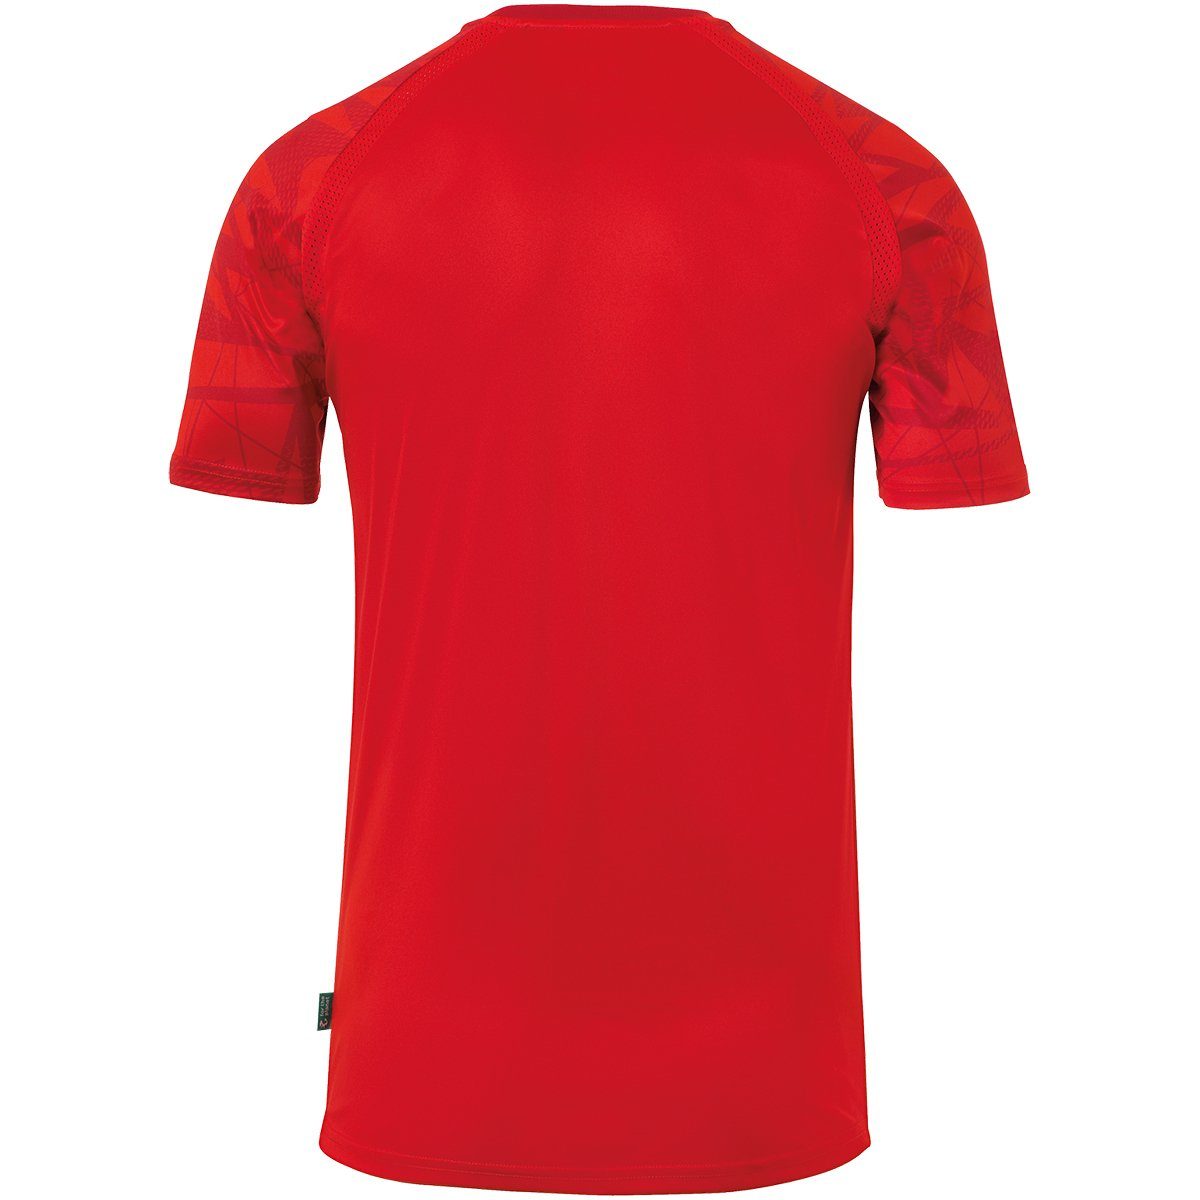 TRIKOT uhlsport 25 rot/weiß KURZARM atmungsaktiv Trainingsshirt Trainings-T-Shirt uhlsport GOAL